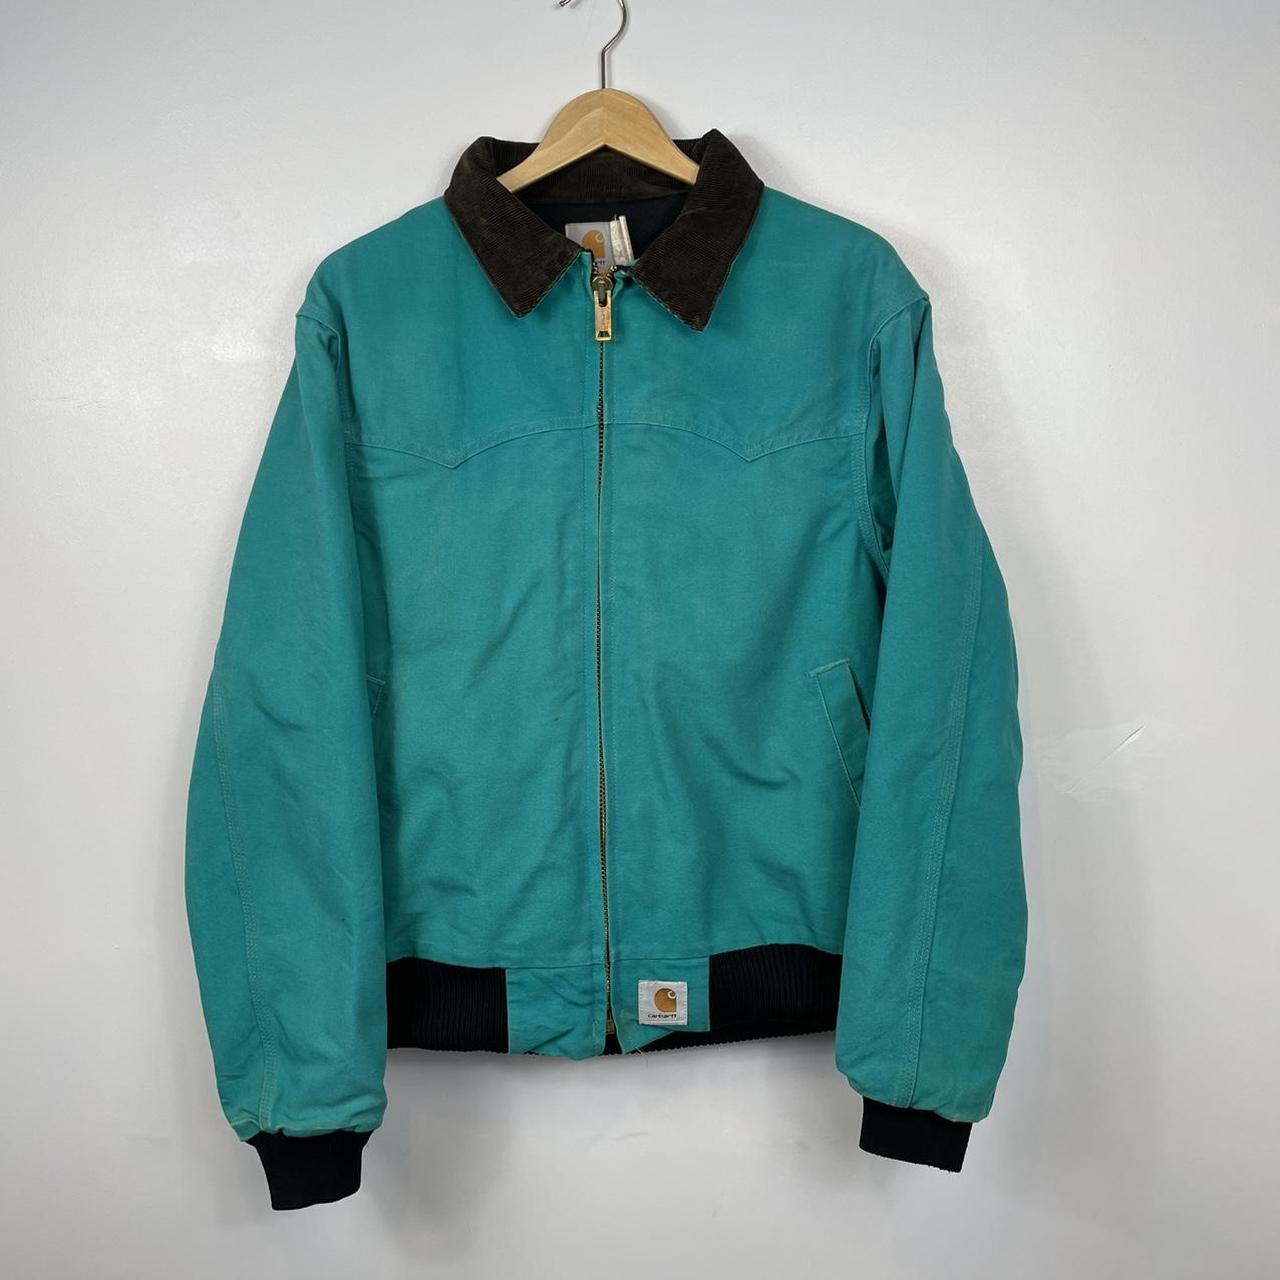 Vintage Carhartt Jacket, Green, Made in USA, Cord... - Depop